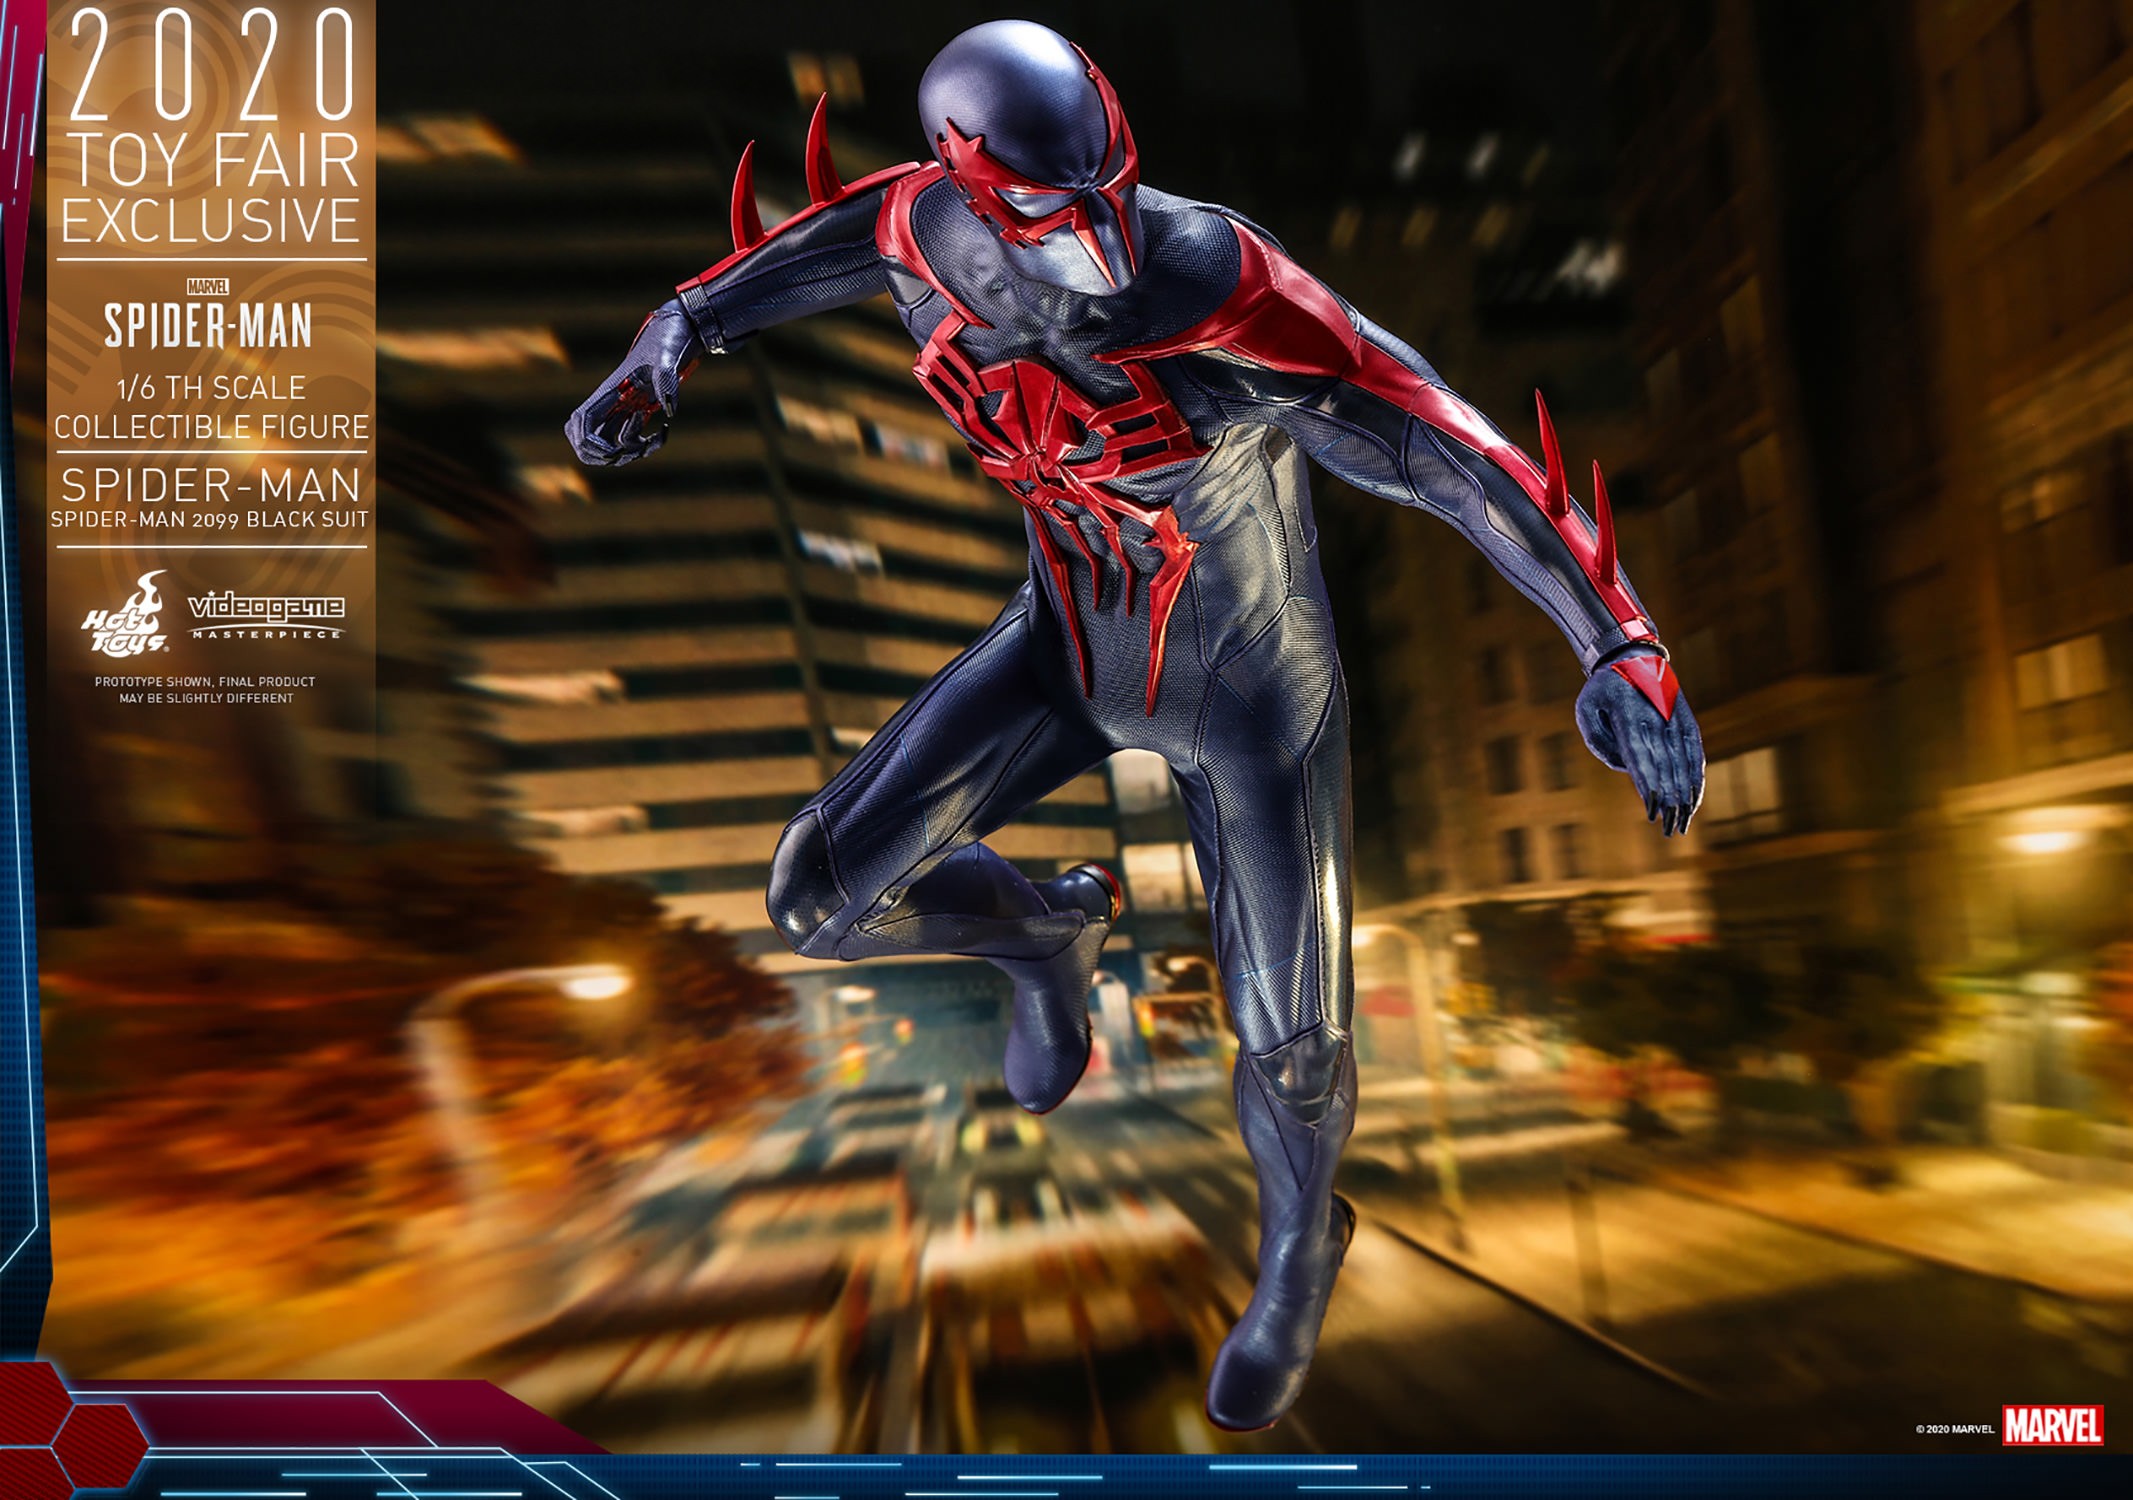 Spider-Man (Spider-Man 2099 Black Suit) Exclusive Edition (Prototype Shown) View 13